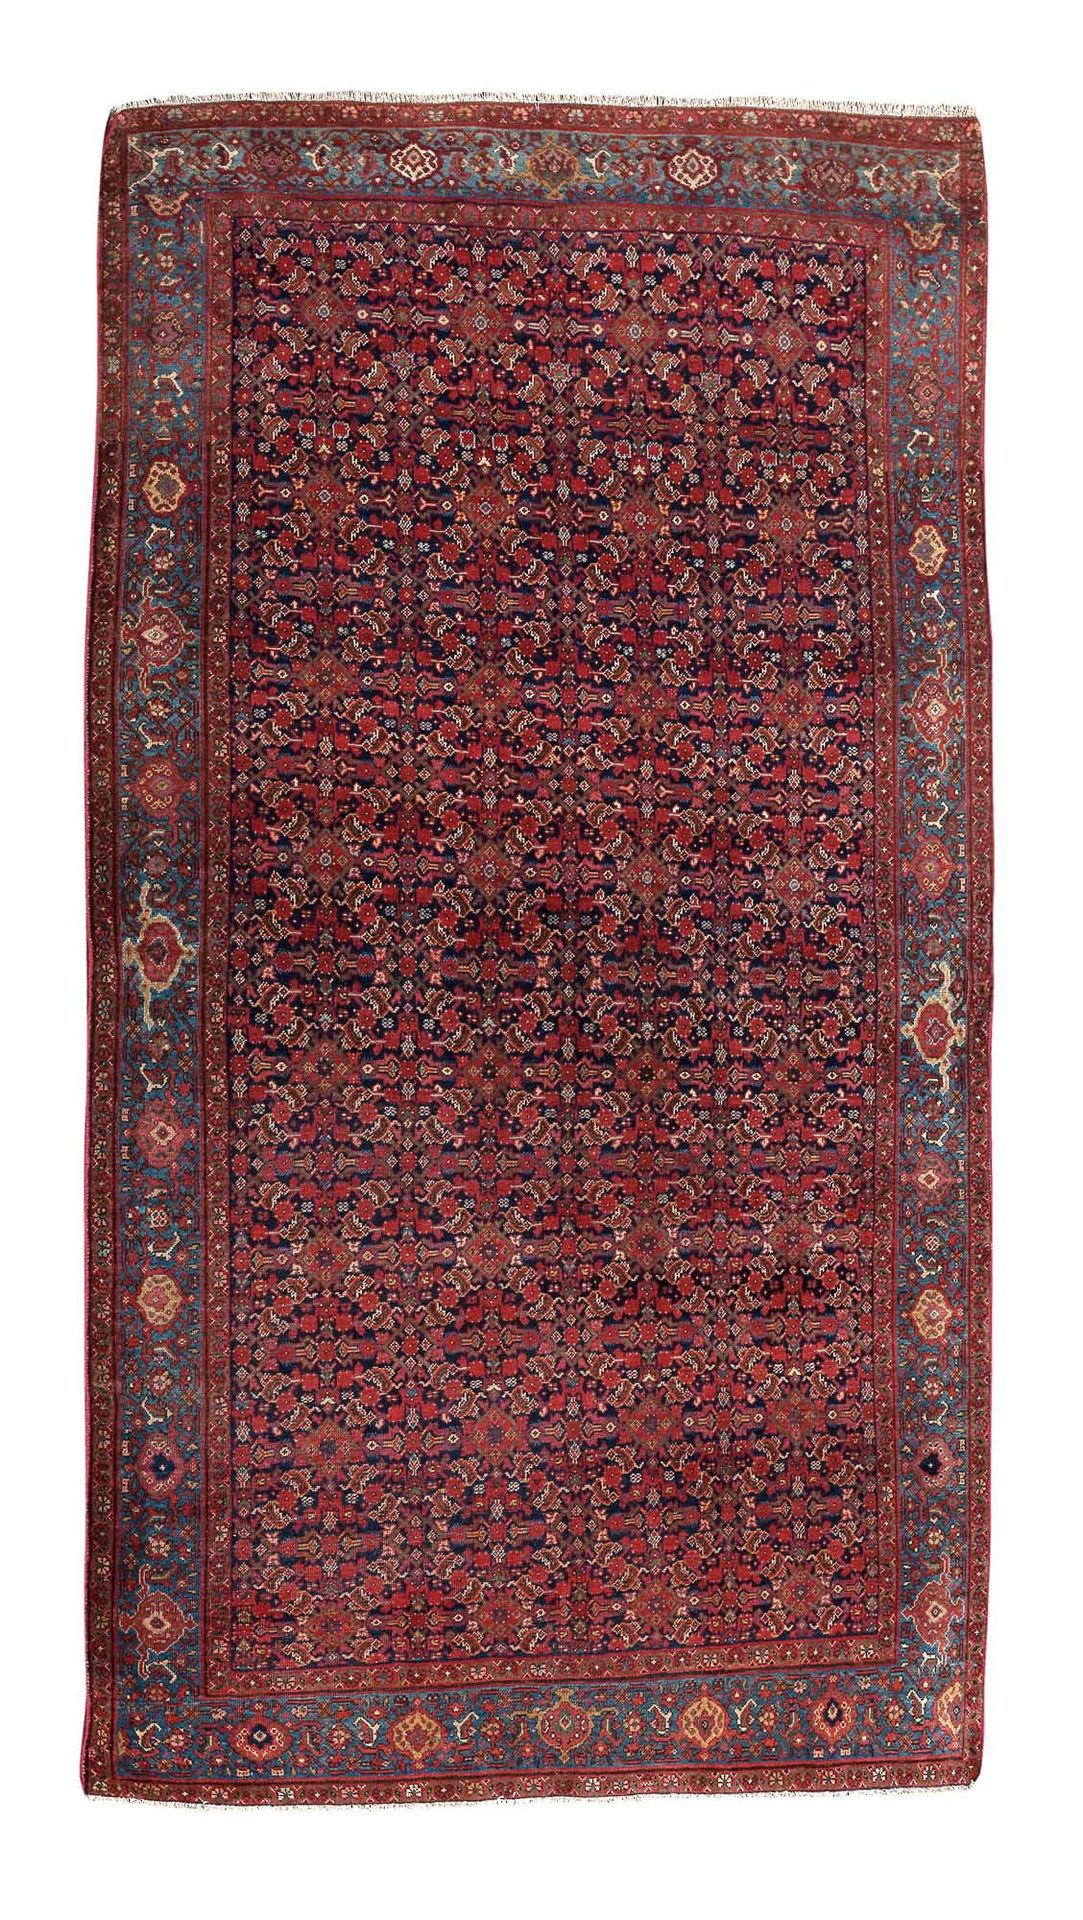 Null 费拉汉（波斯）地毯，19世纪末

尺寸：200 x 122厘米

技术特点 : 羊毛天鹅绒，棉质底板。

在主场的砖头背景上有一个被称为 "Herat&hellip;